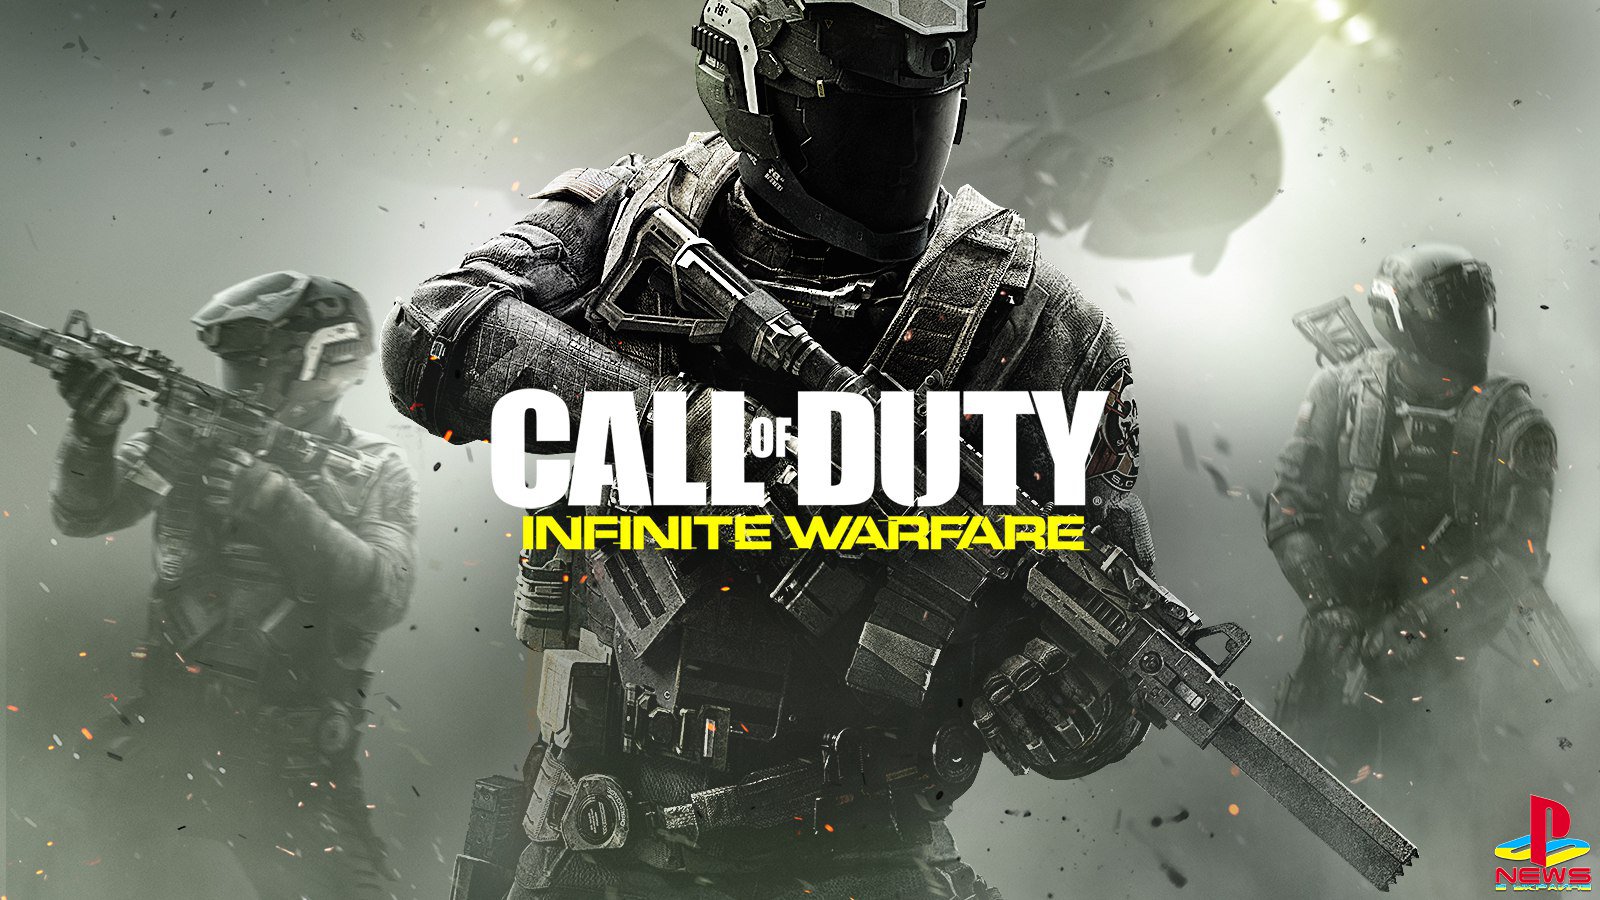   - Call of Duty: Infinite Warfare     